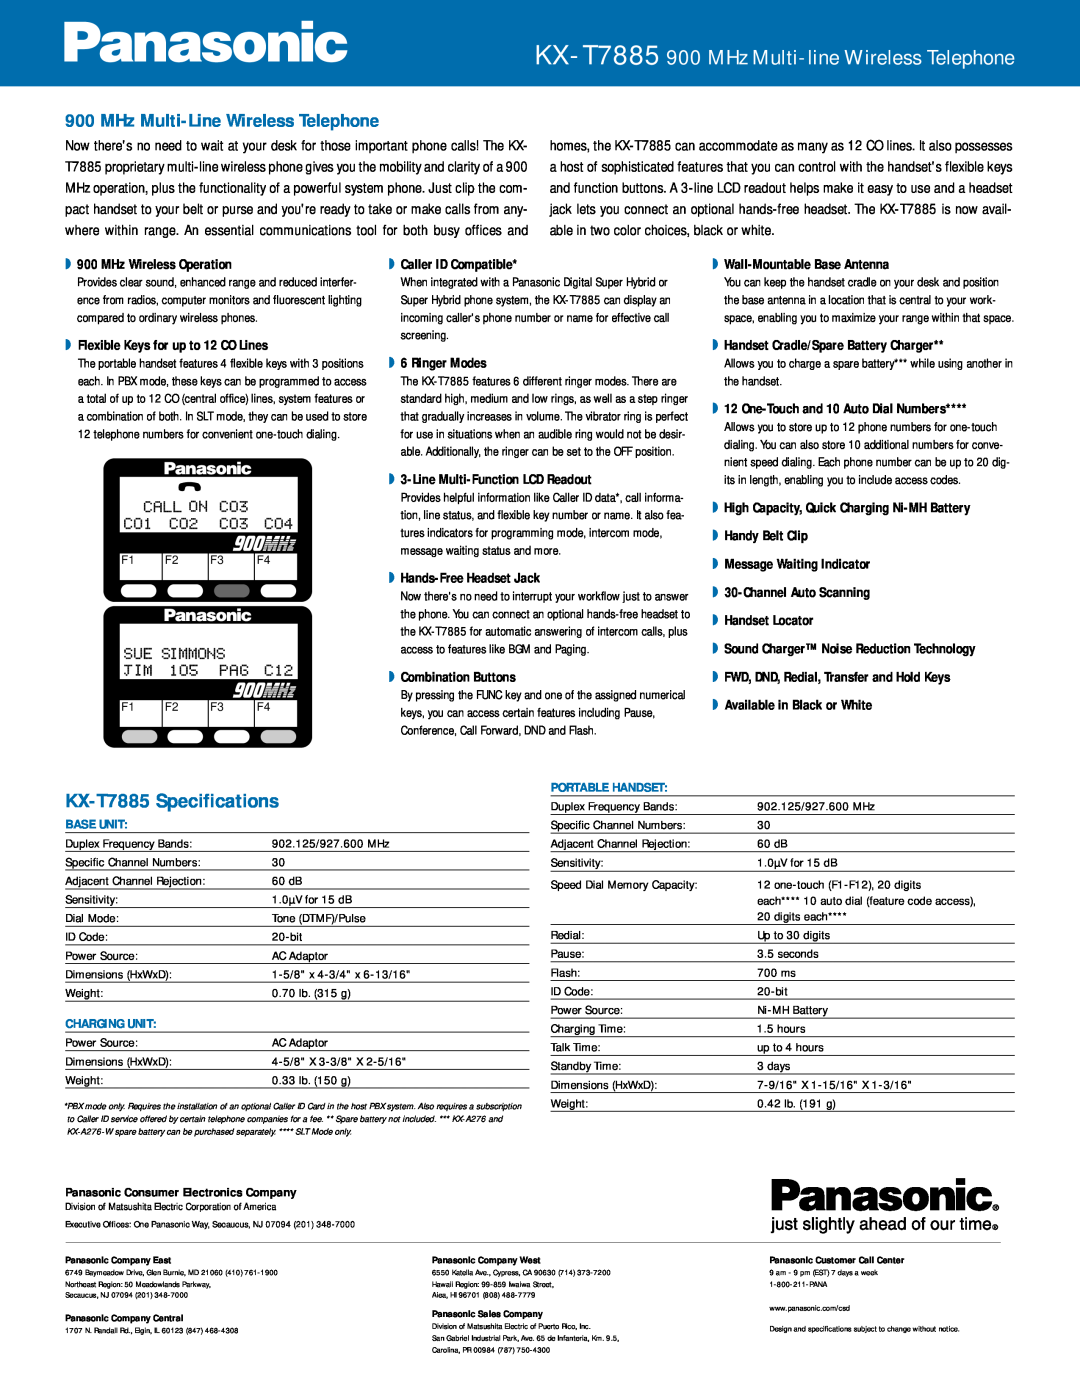 Panasonic KX-T7885 900 MHz Multi-line Wireless Telephone, KX-T7885 Specifications, MHz Multi-Line Wireless Telephone 